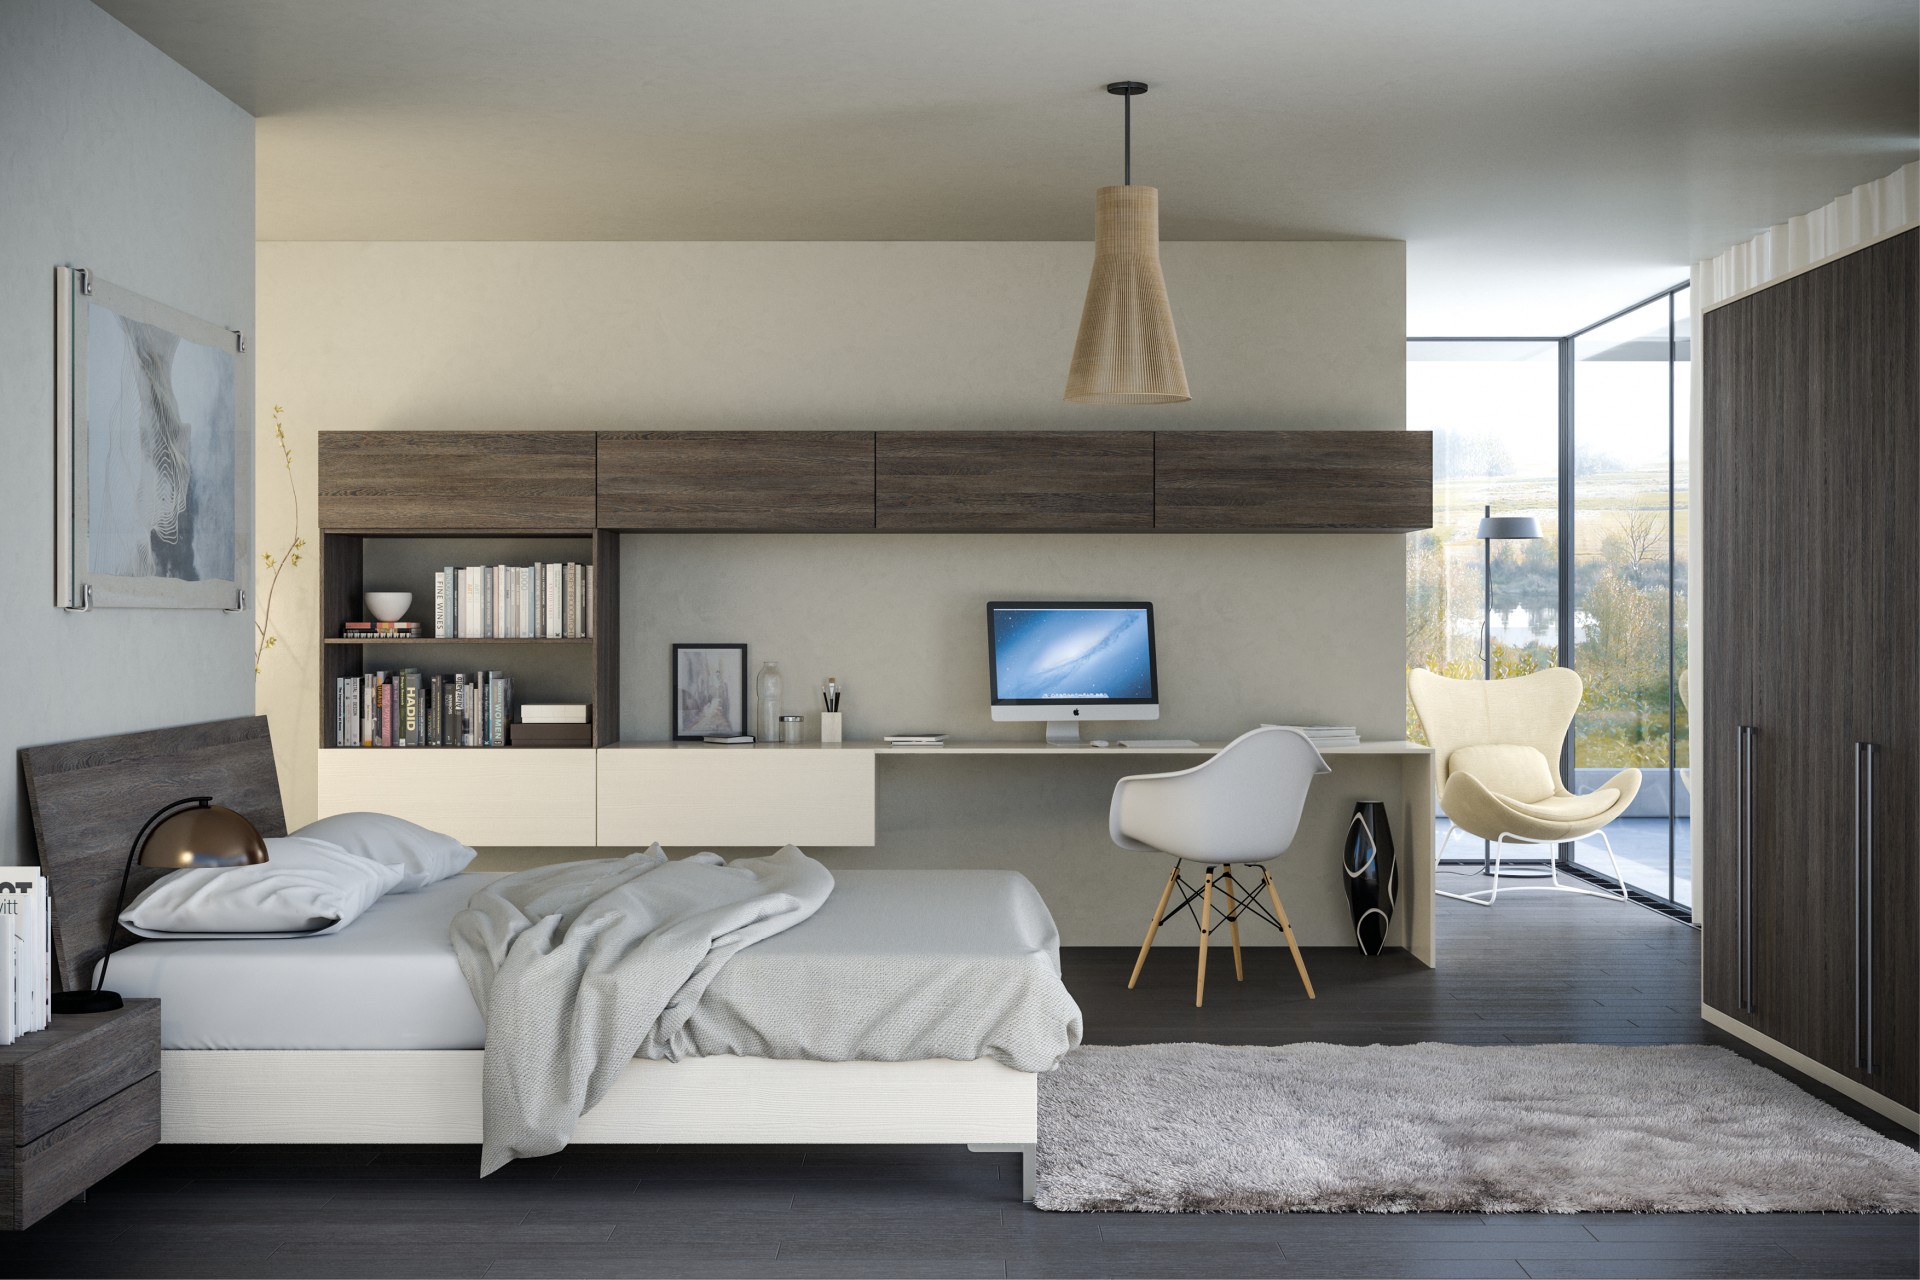 Your Dream Kitchen | Bedroom Modern